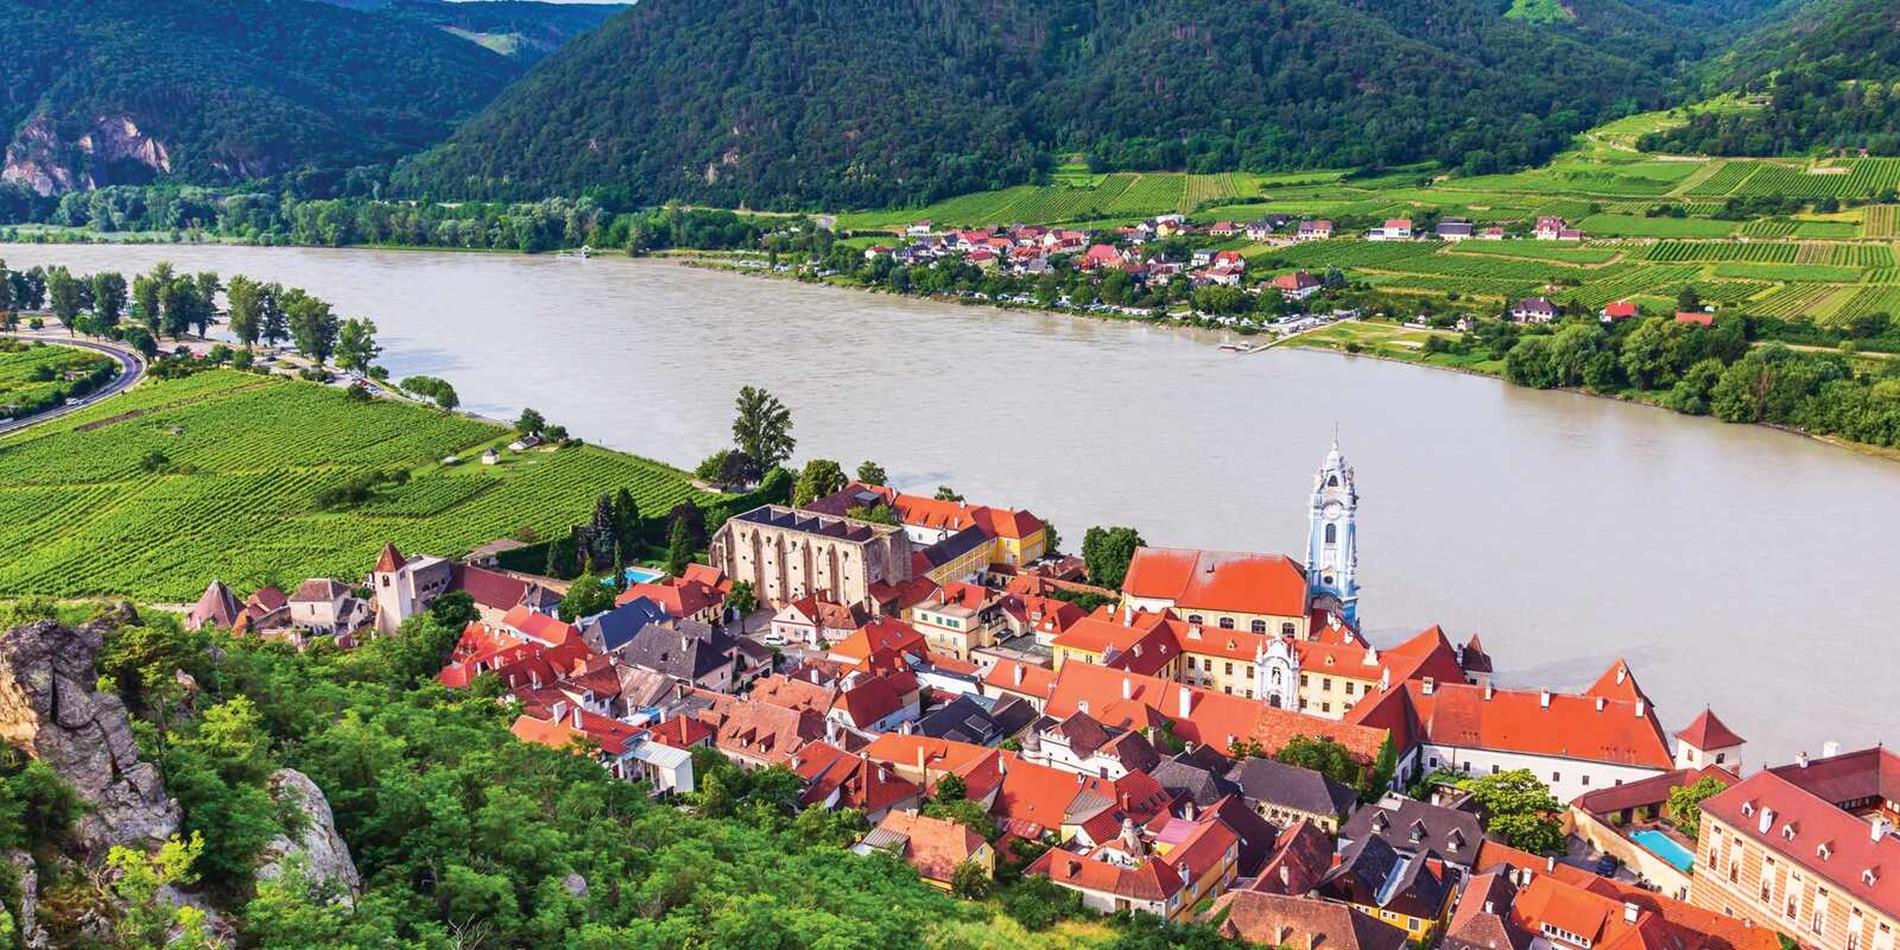 The small town of Durnstein in Wachau Valley